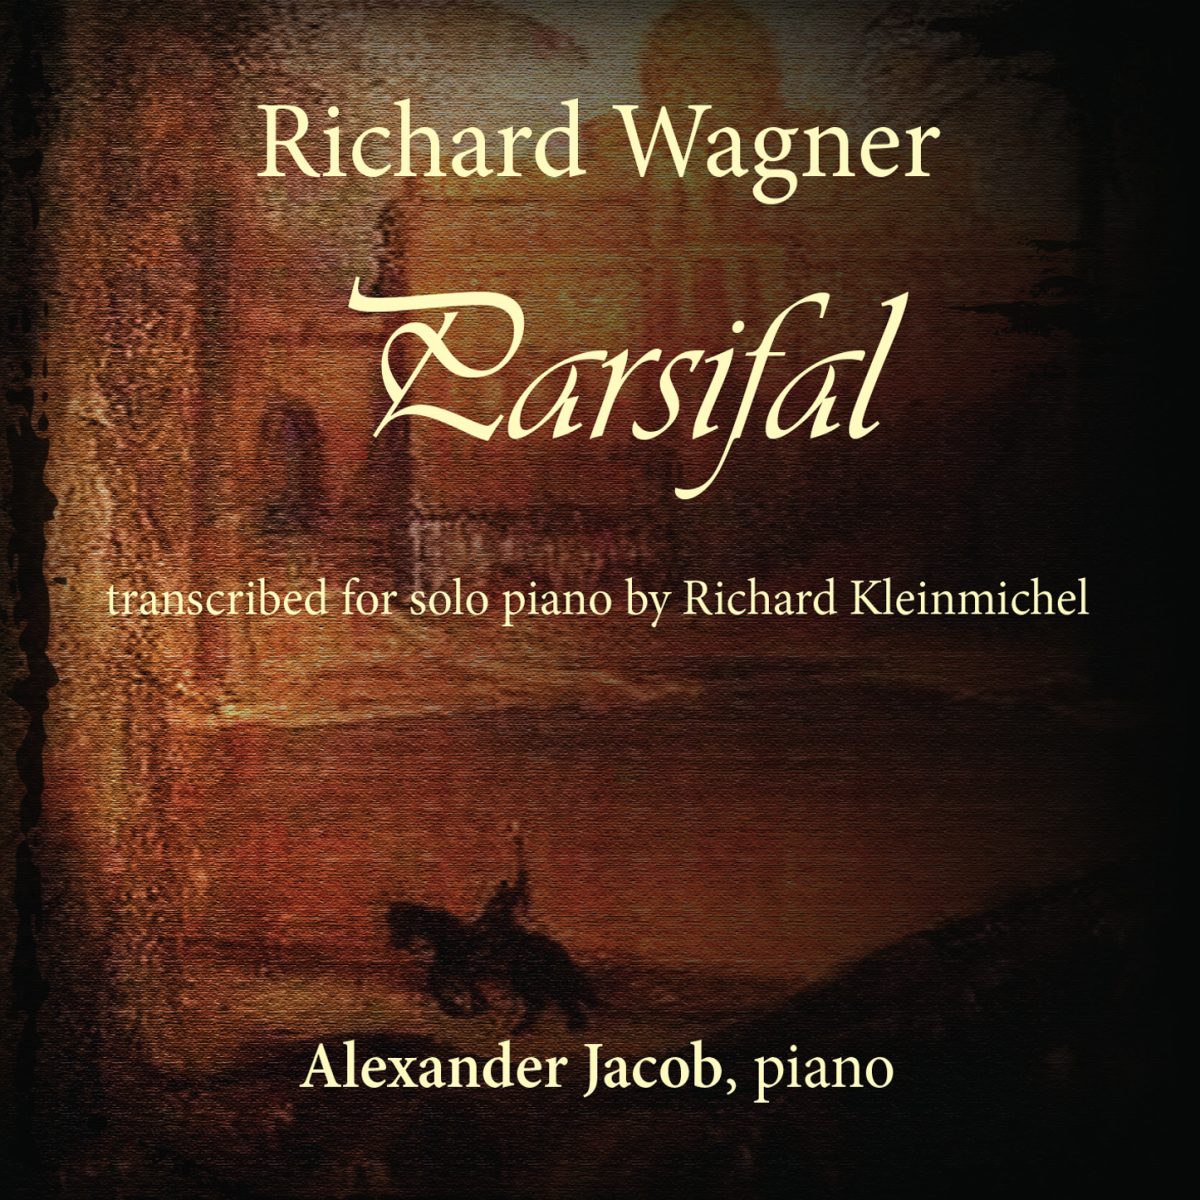 Richard Wagner - Parsifal » Manticore Press